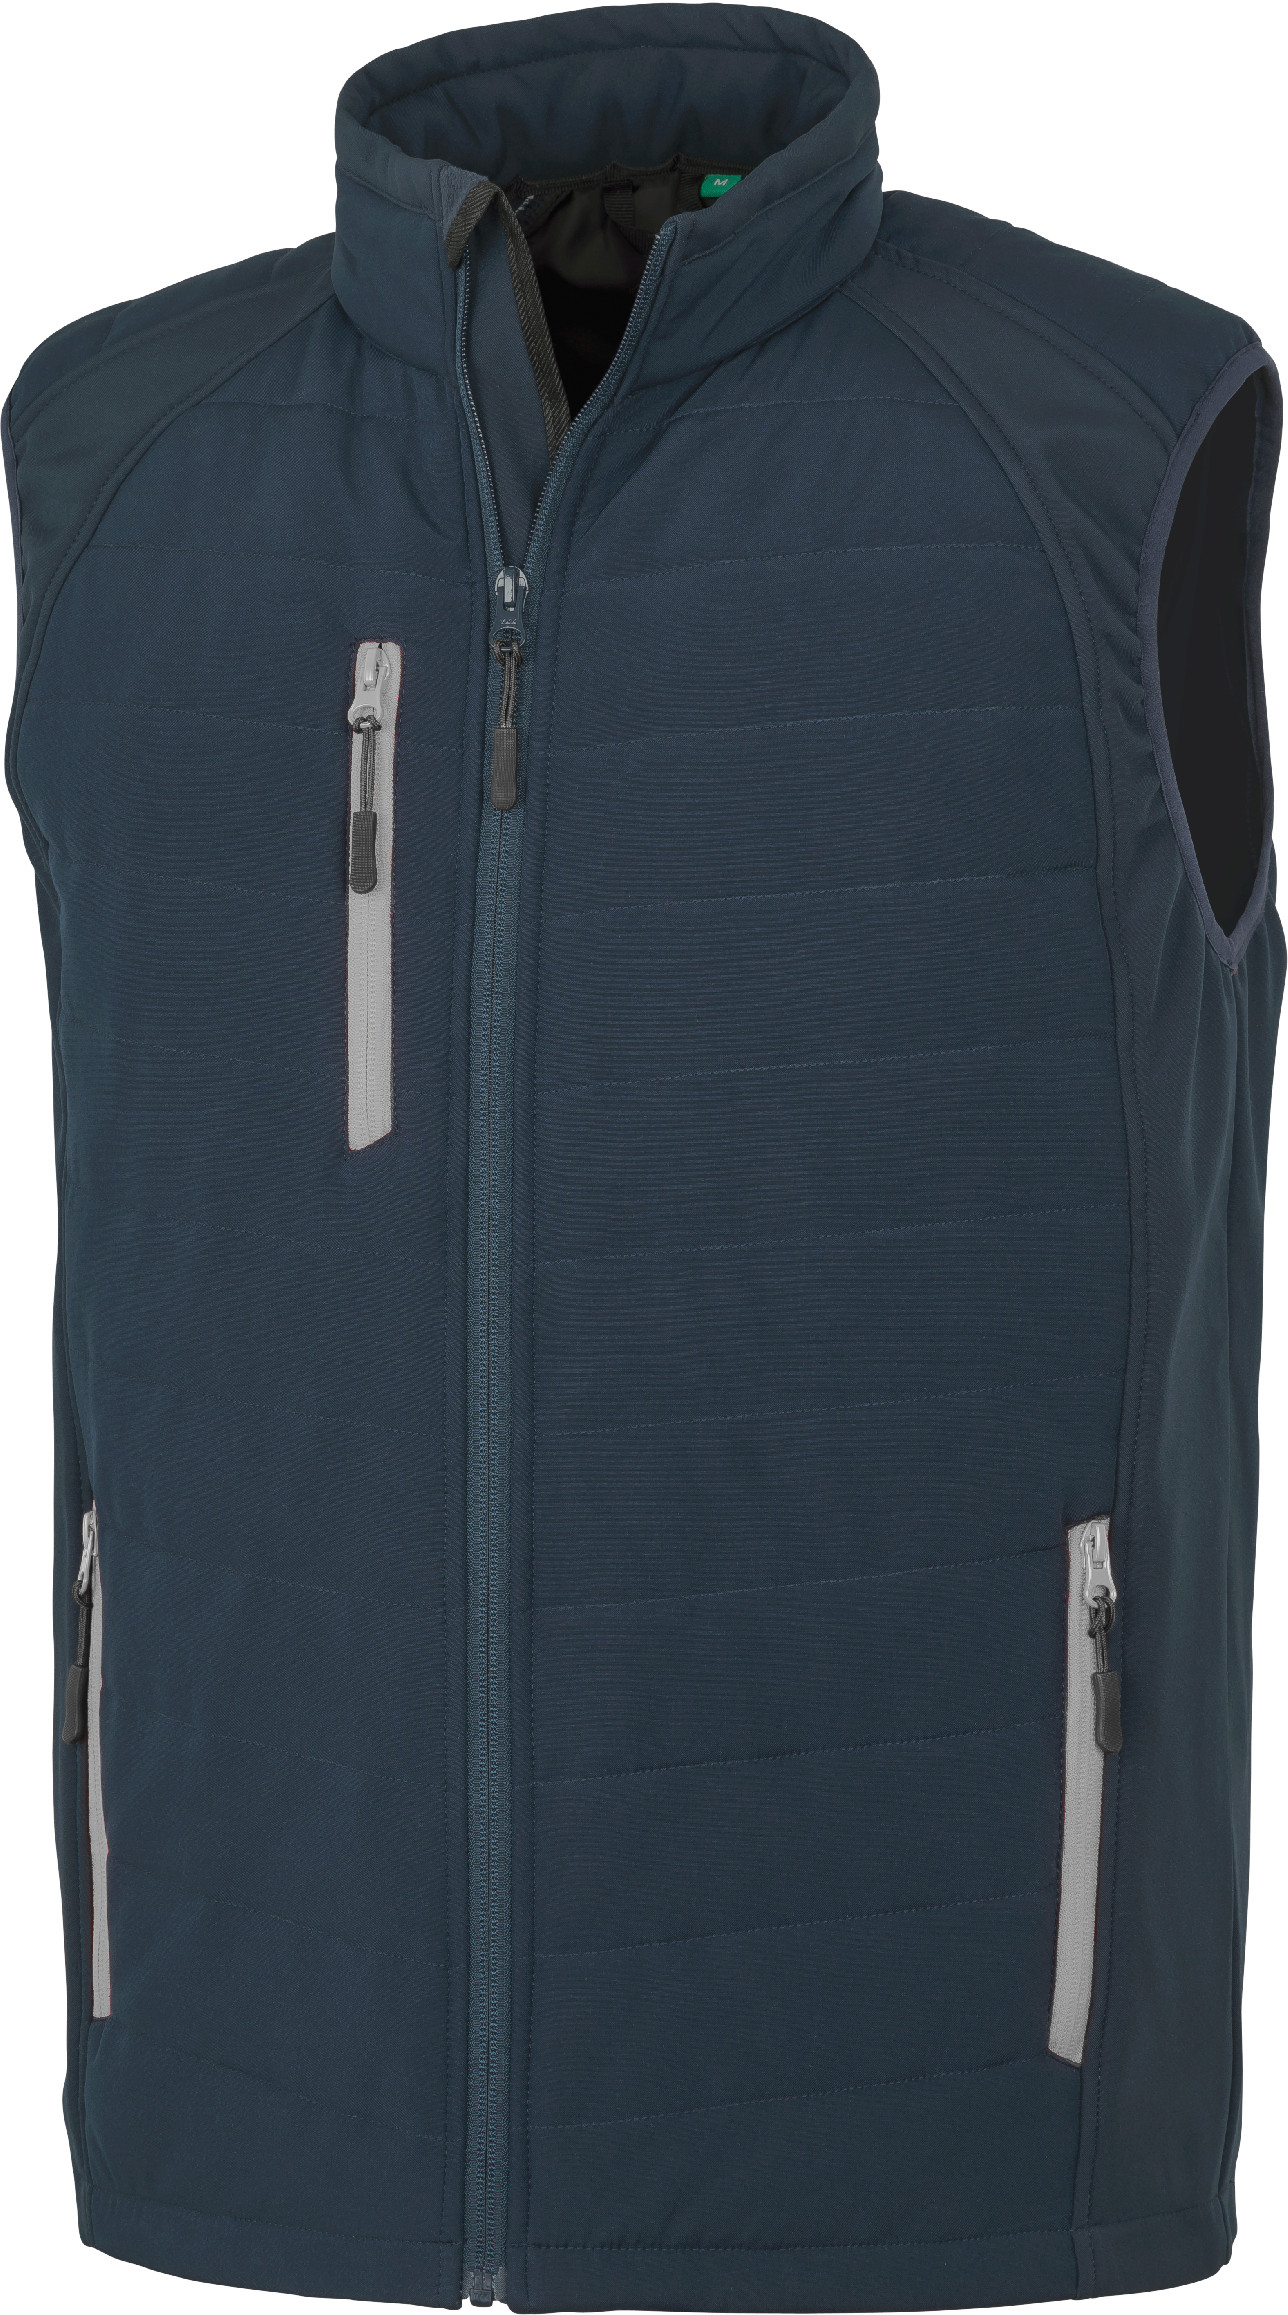 Polstrovaná softshell vesta Compass R238X Barva: námořní modrá-šedá, Velikost: L